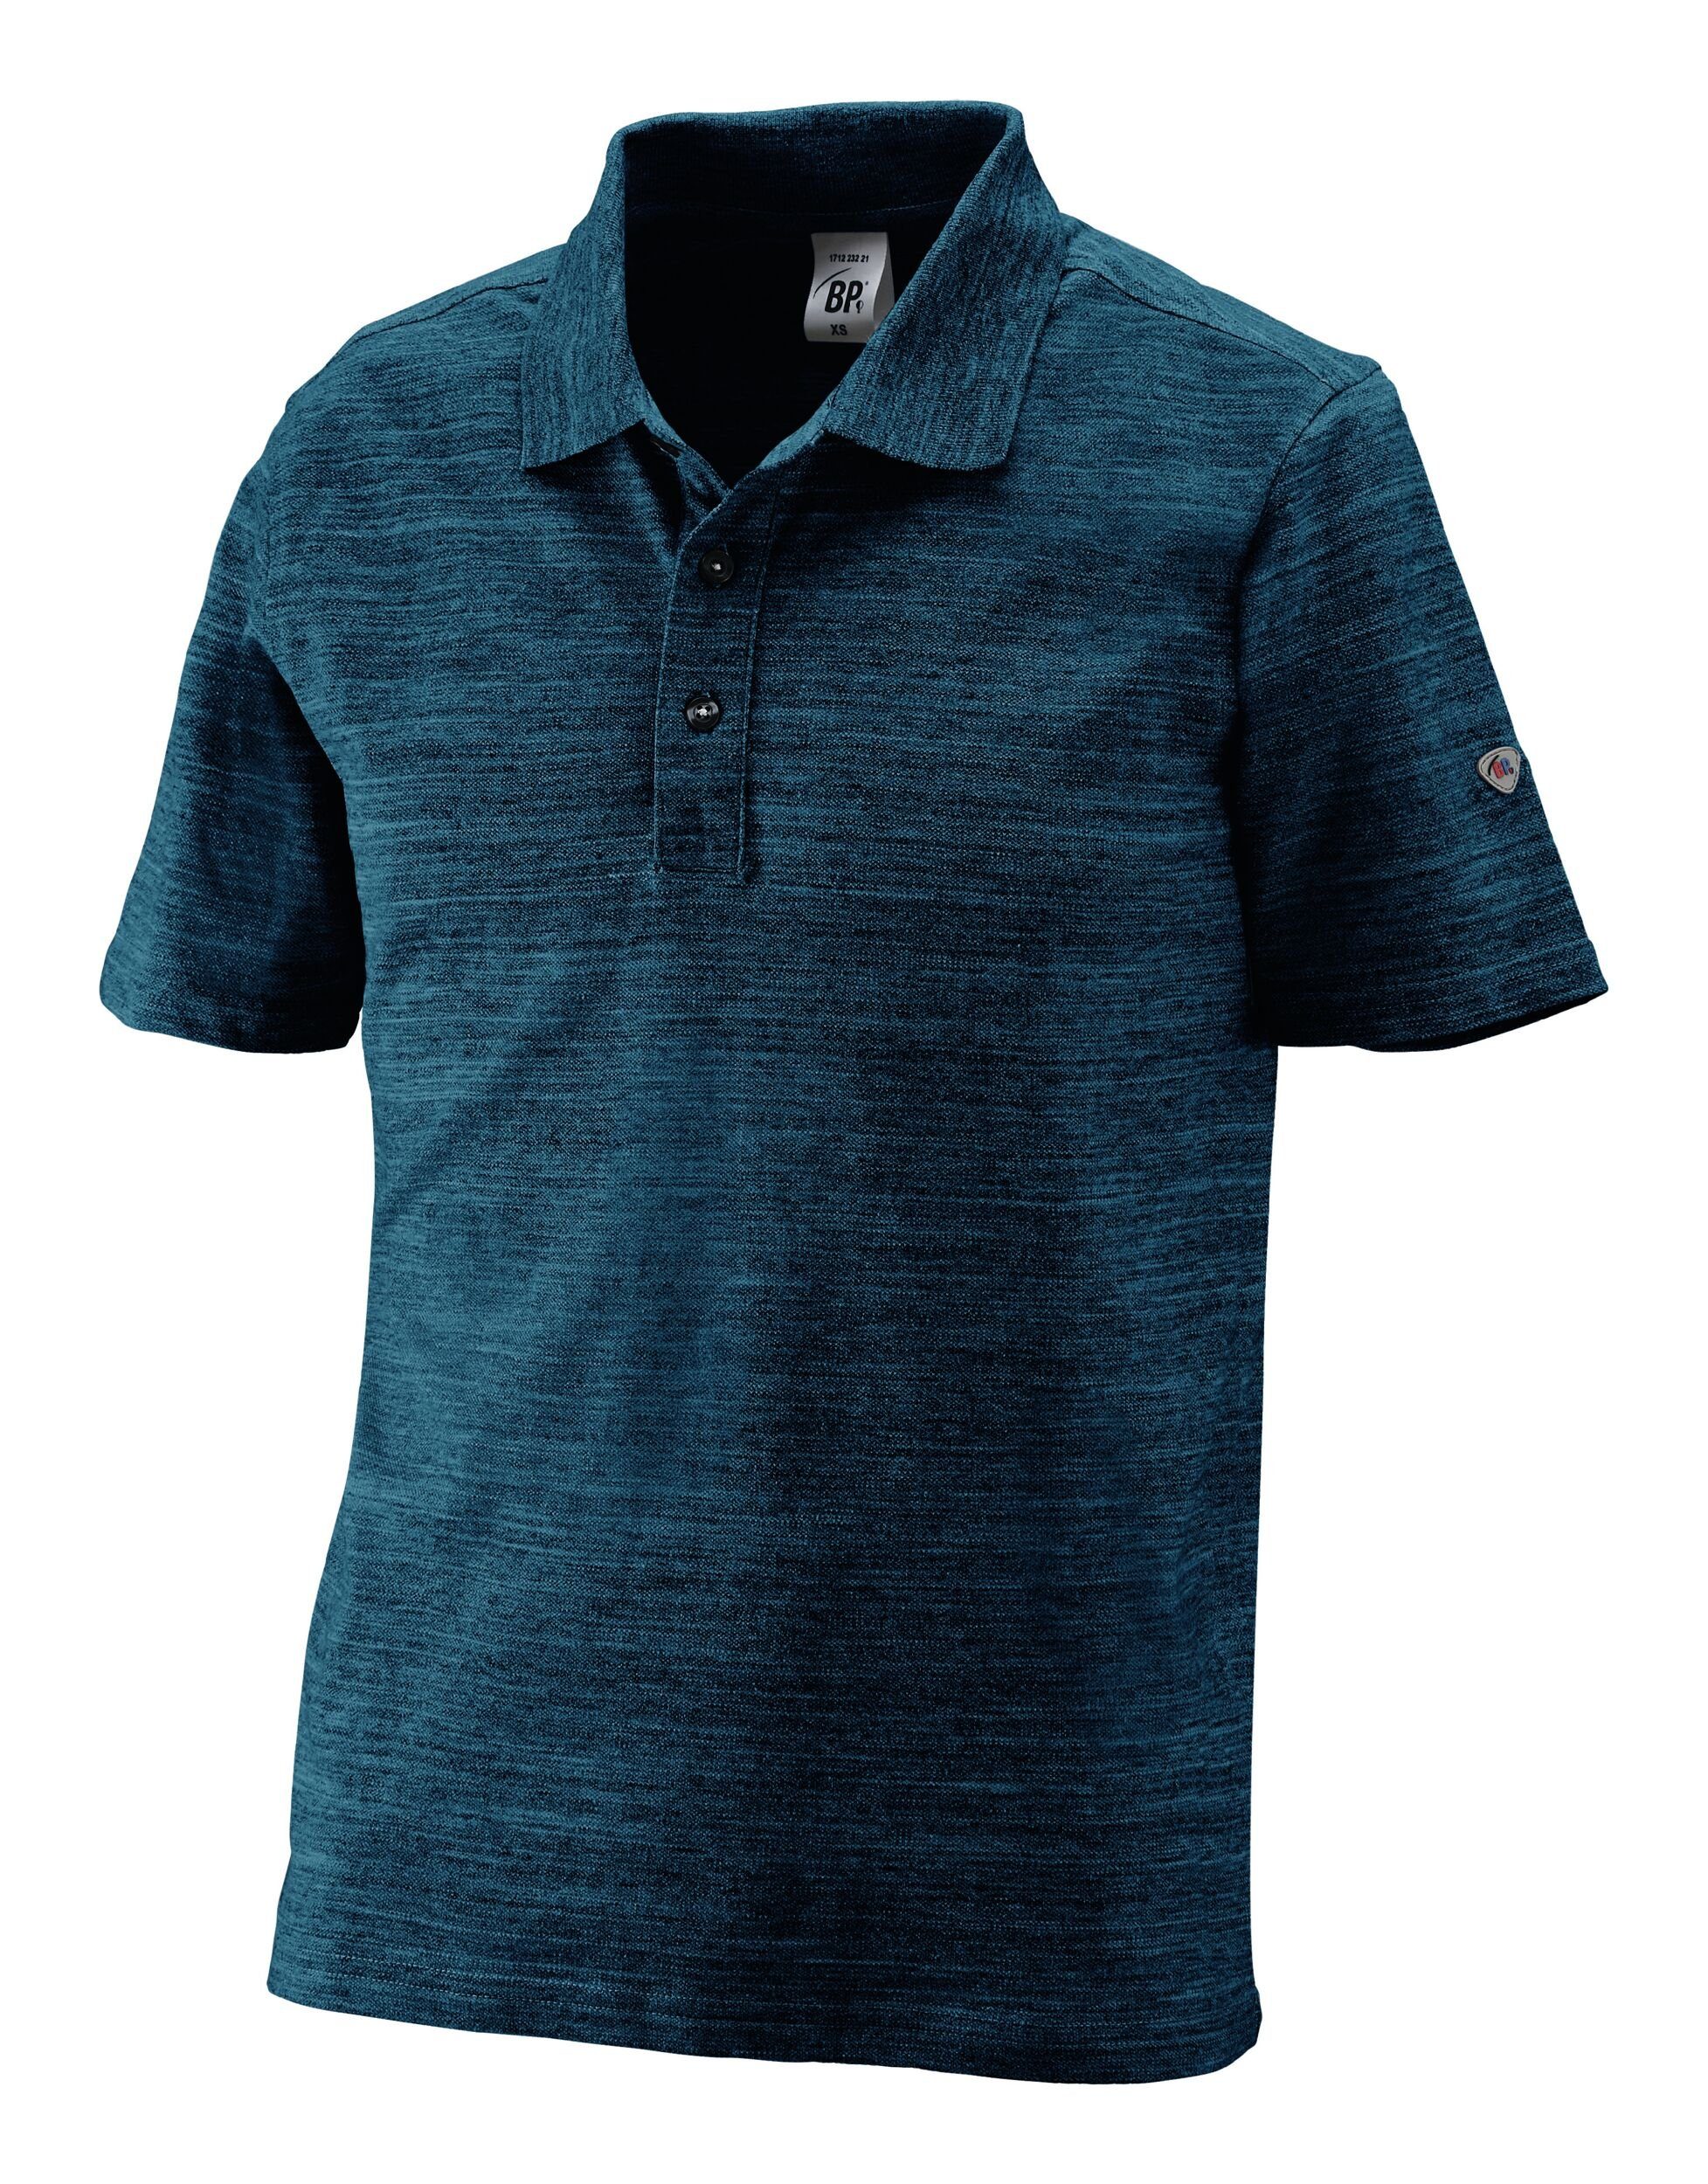 bp Poloshirt 1712, space nachtblau, Größe L